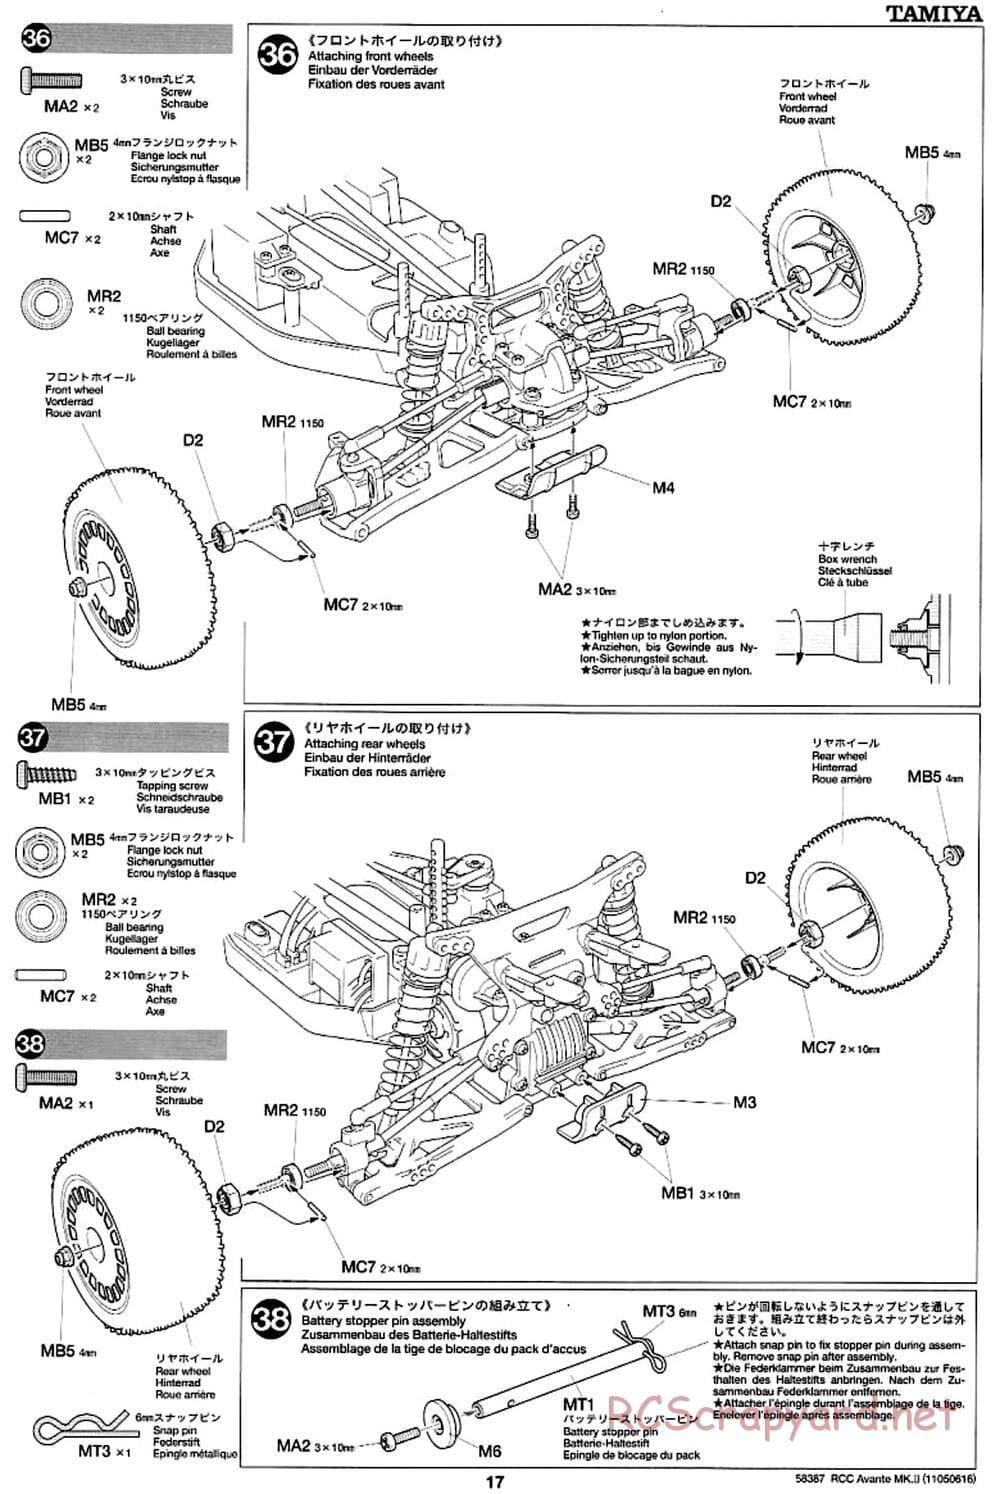 Tamiya - Avante Mk.II Chassis - Manual - Page 17